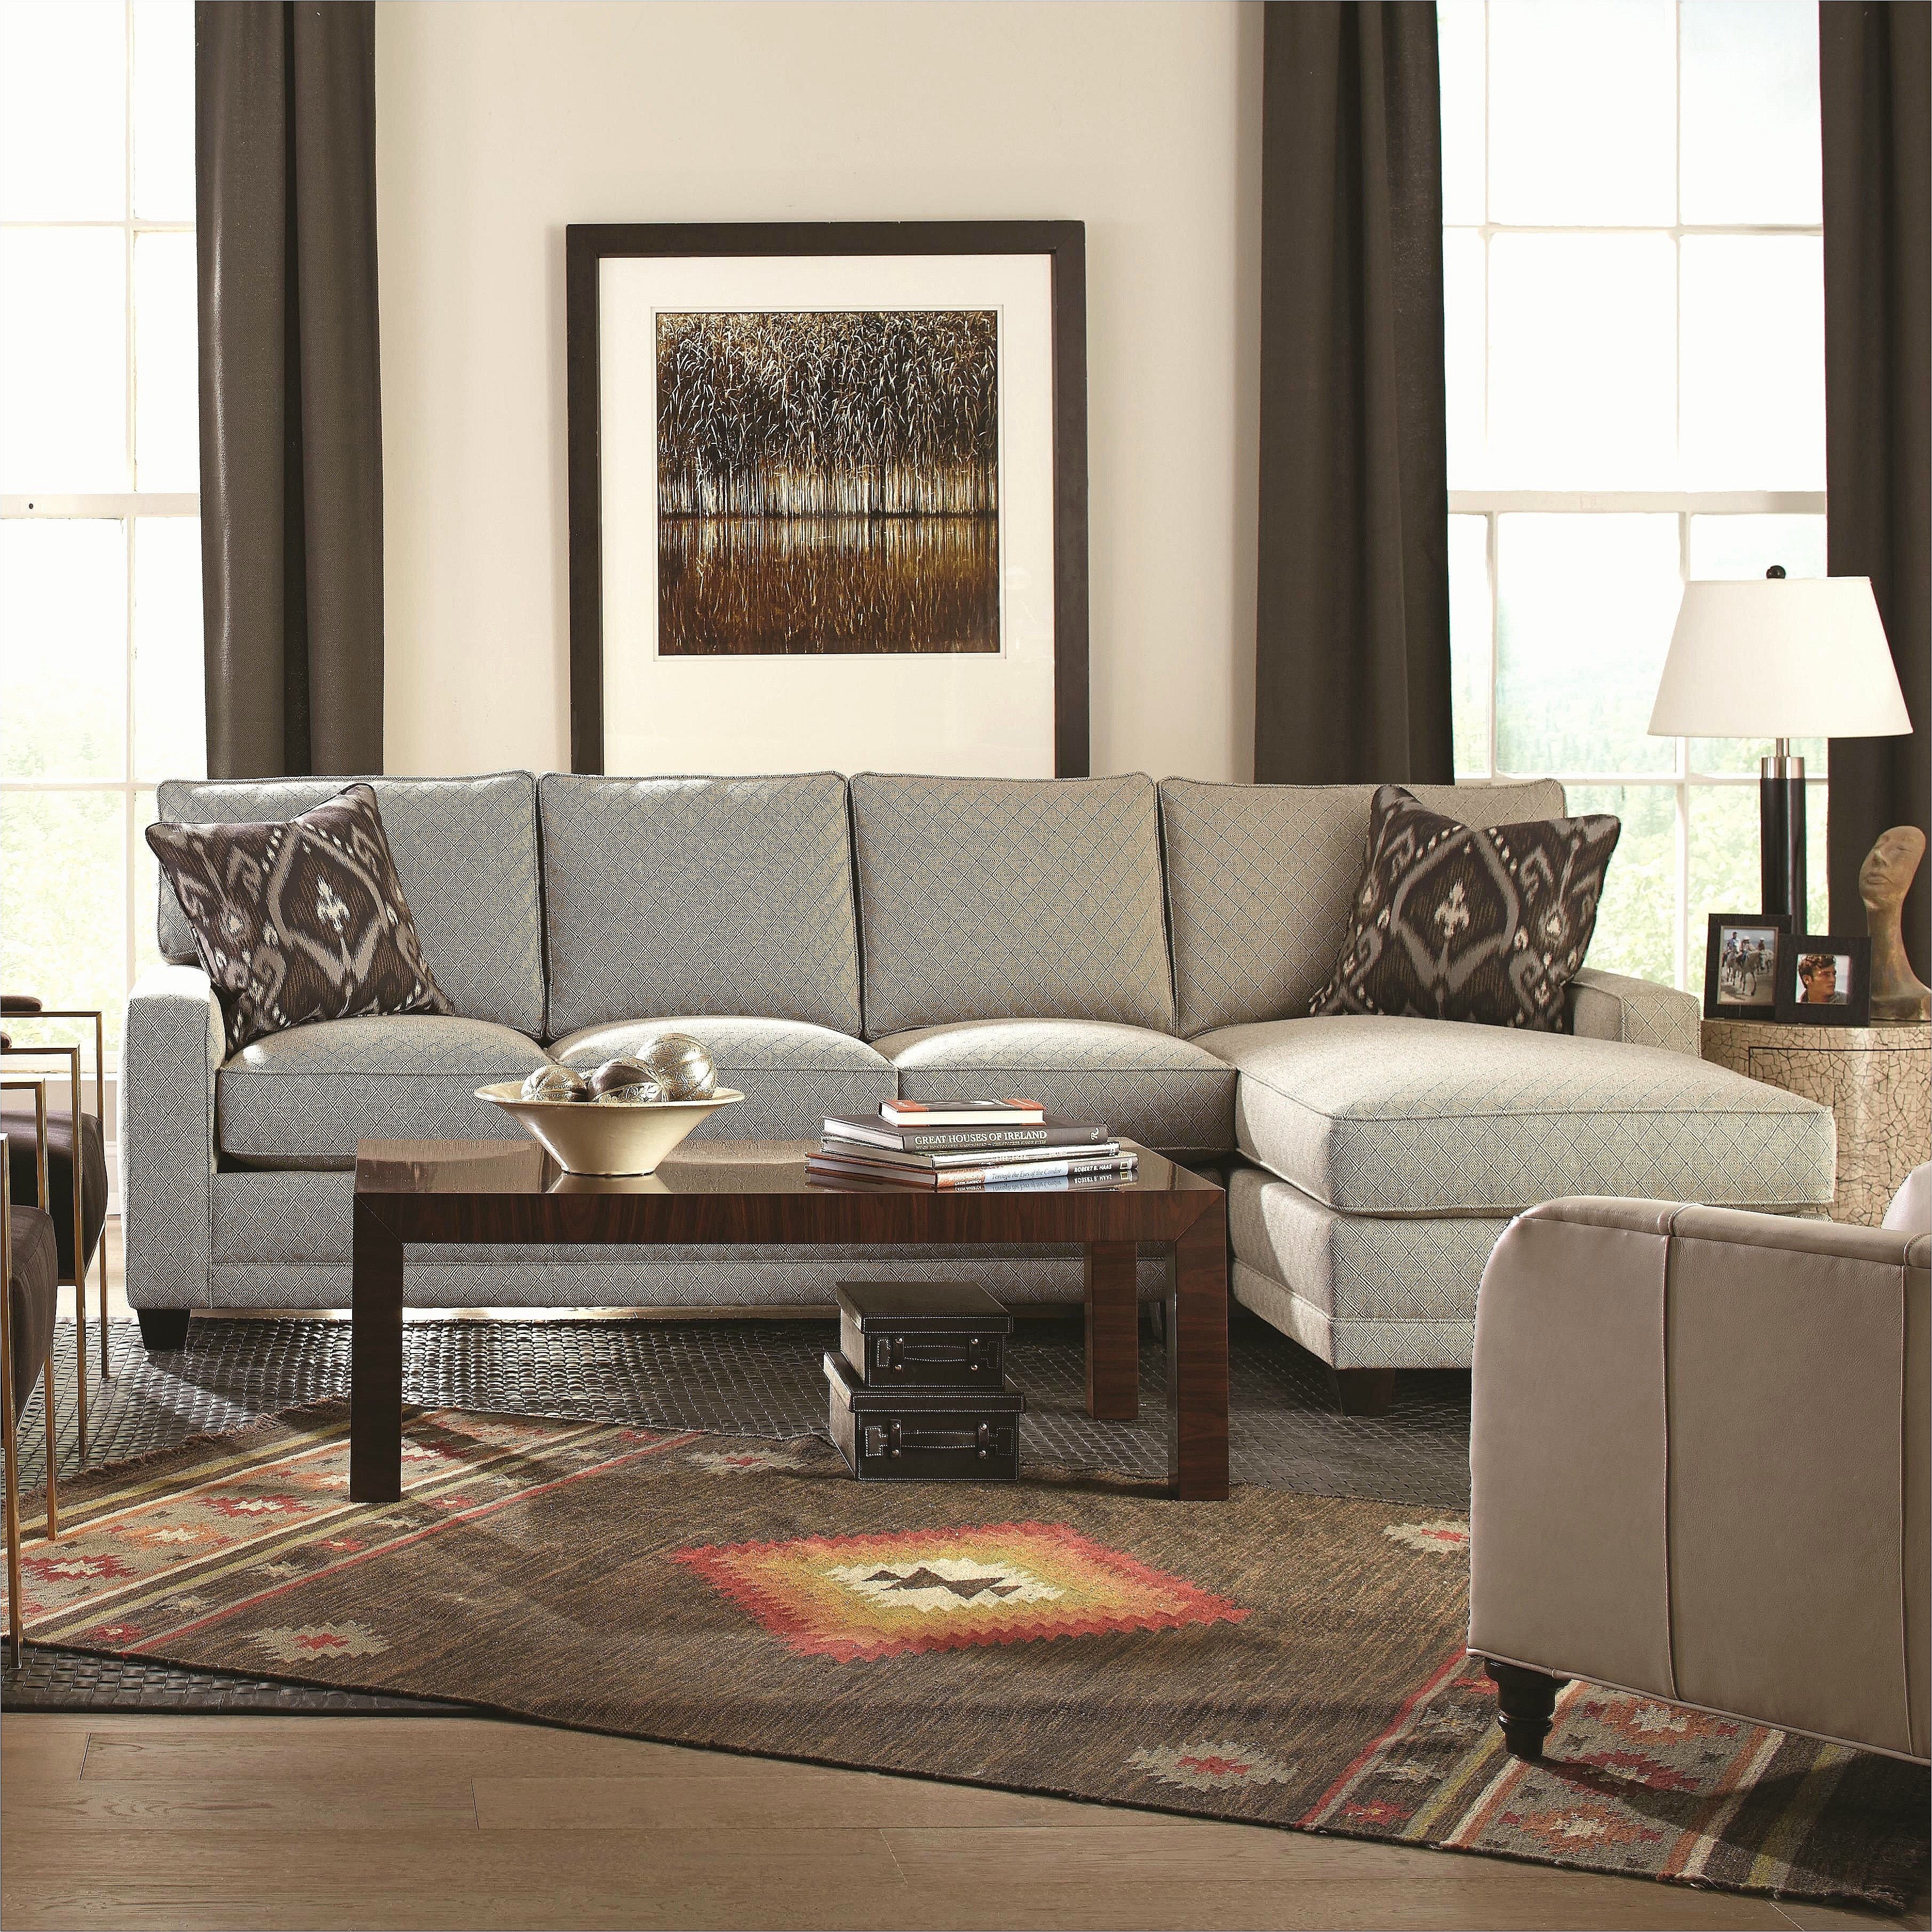 Sofas by Design Elegant Modern Living Room Furniture New Gunstige sofa Macys Furniture 0d